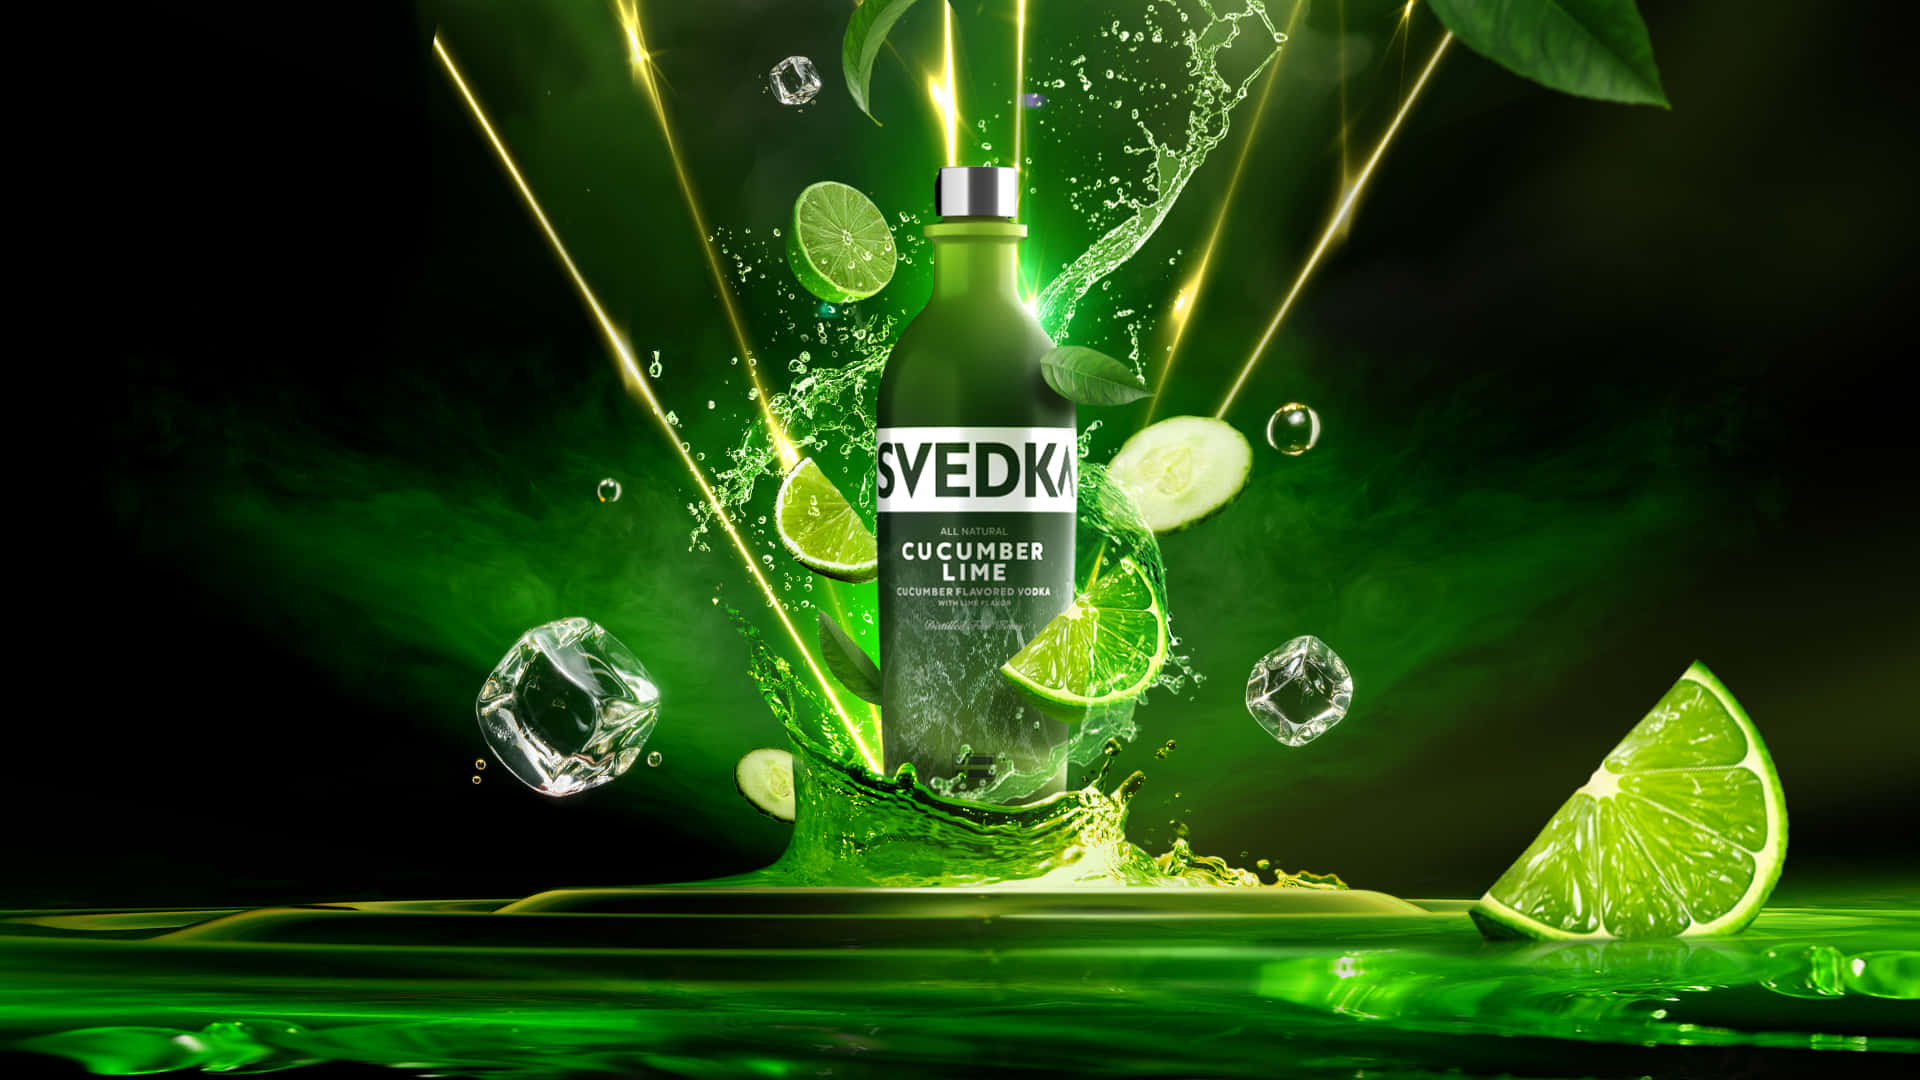 Svedka Cucumber Lime Flavored Vodka Wallpaper